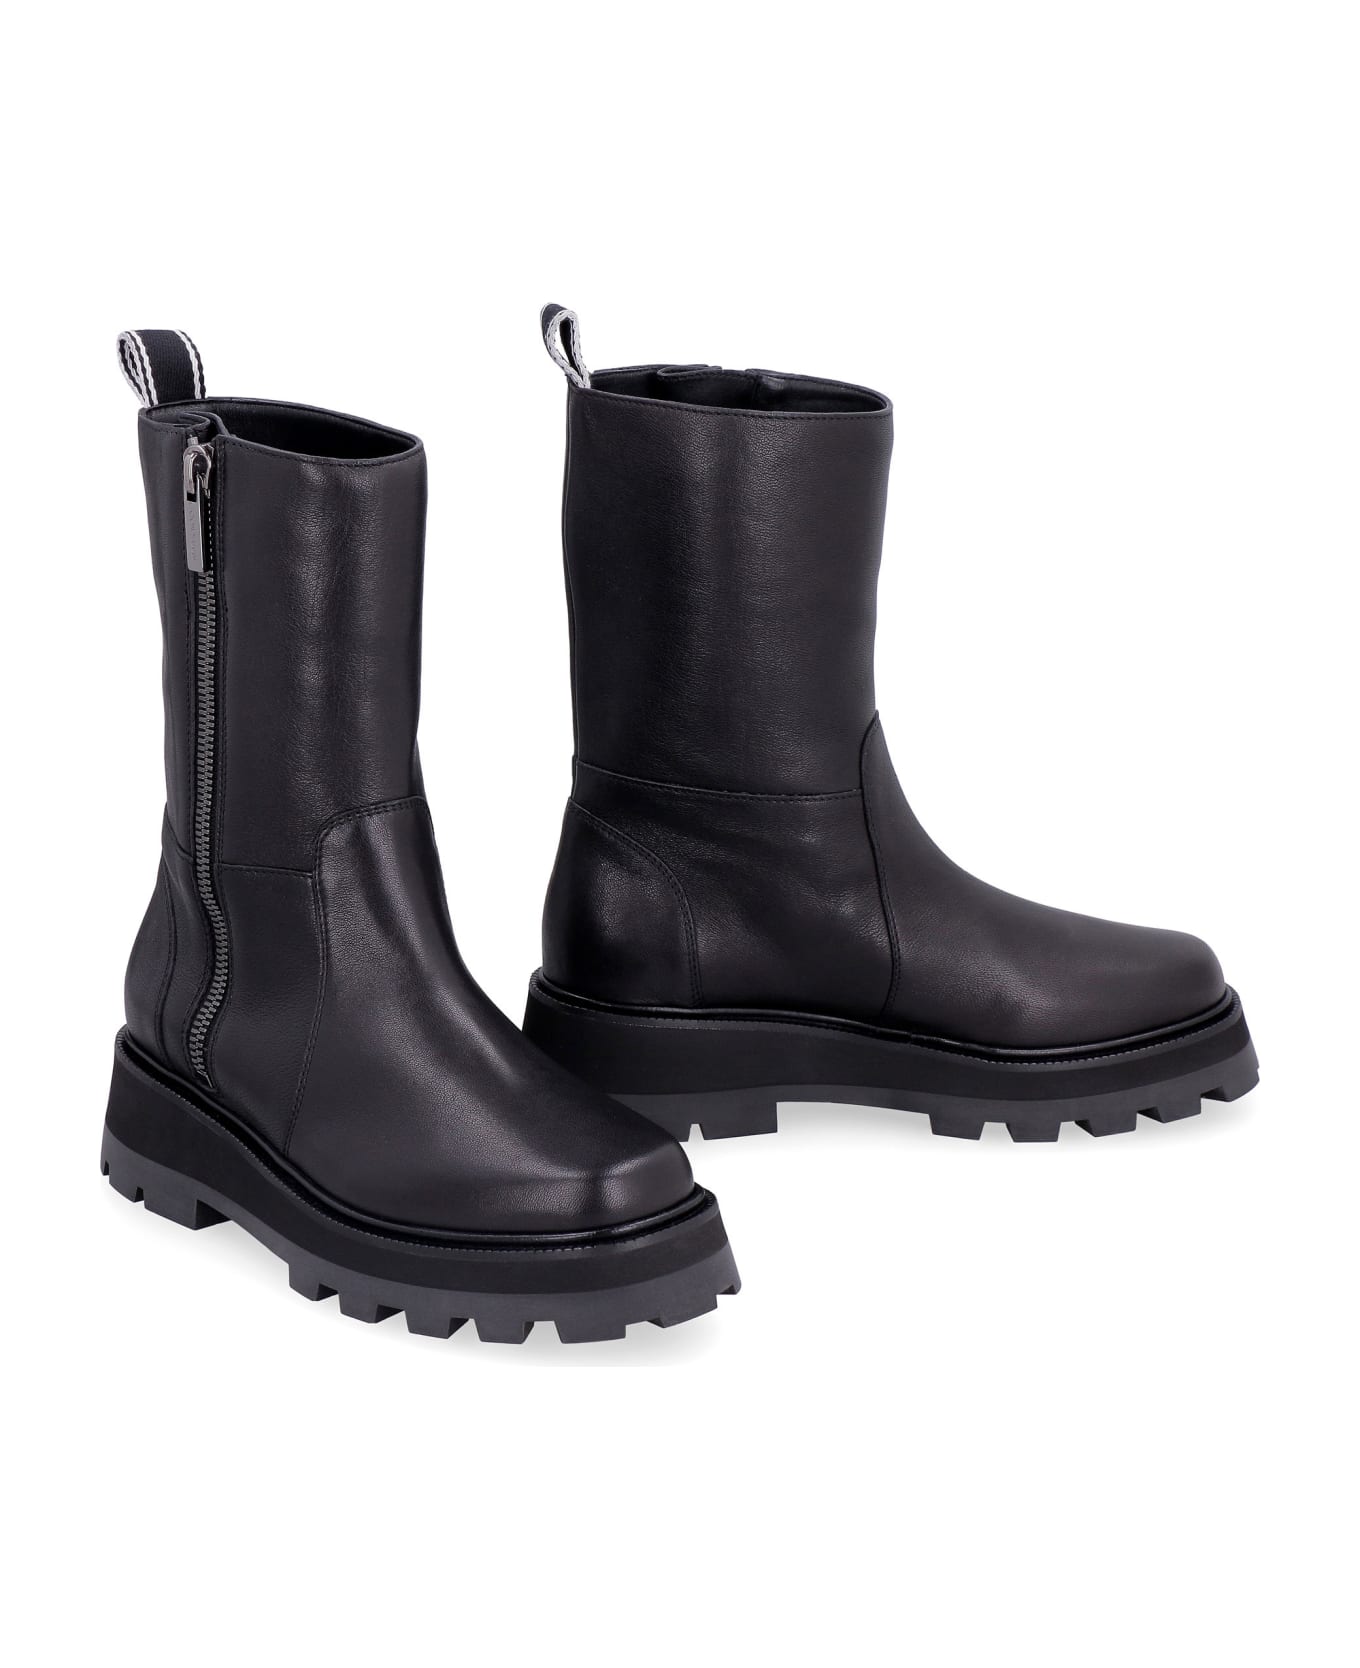 Jimmy Choo Bayu Flat Leather Boots - Black ブーツ